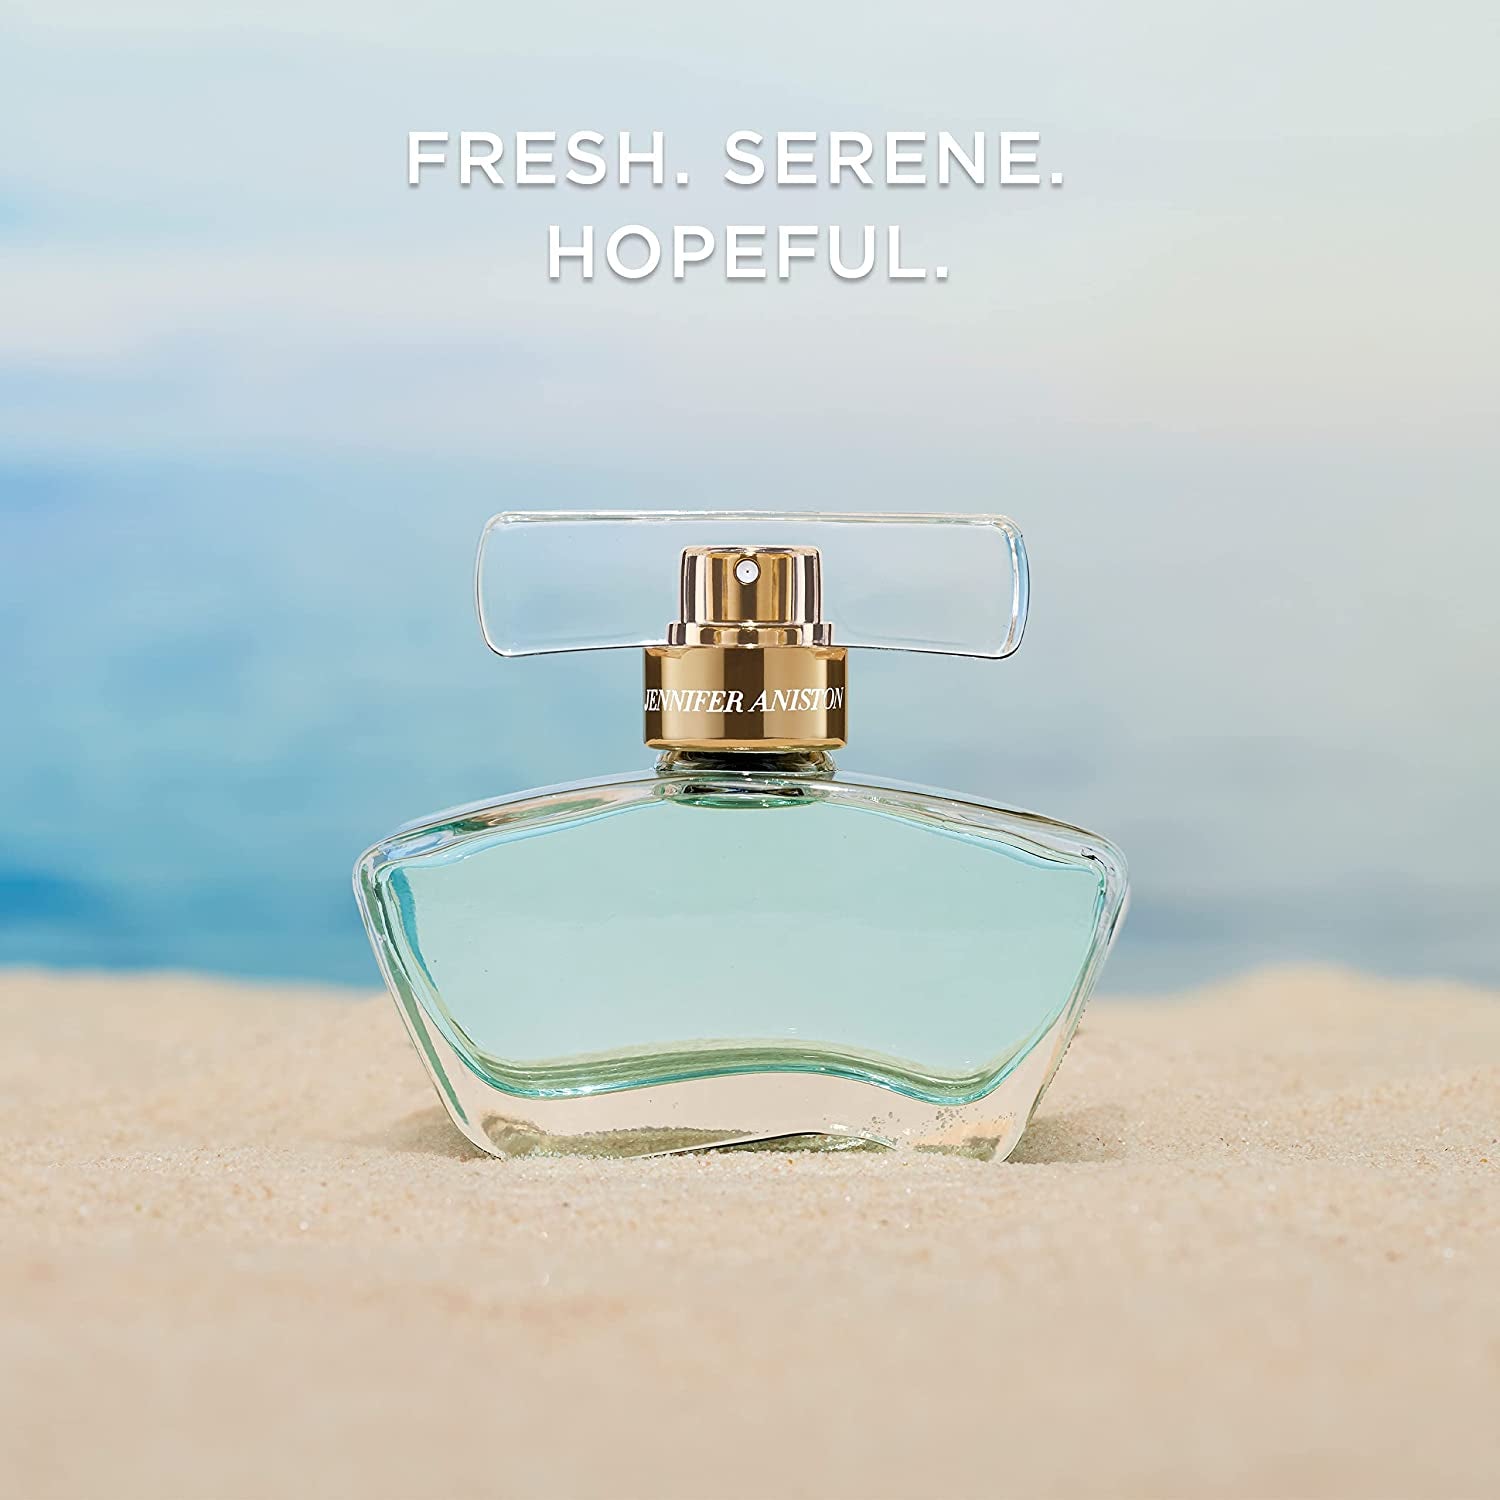 Jennifer Aniston Women's Perfume Fragrance, Ea De Parfum, Beachscape, 1 Fl Oz